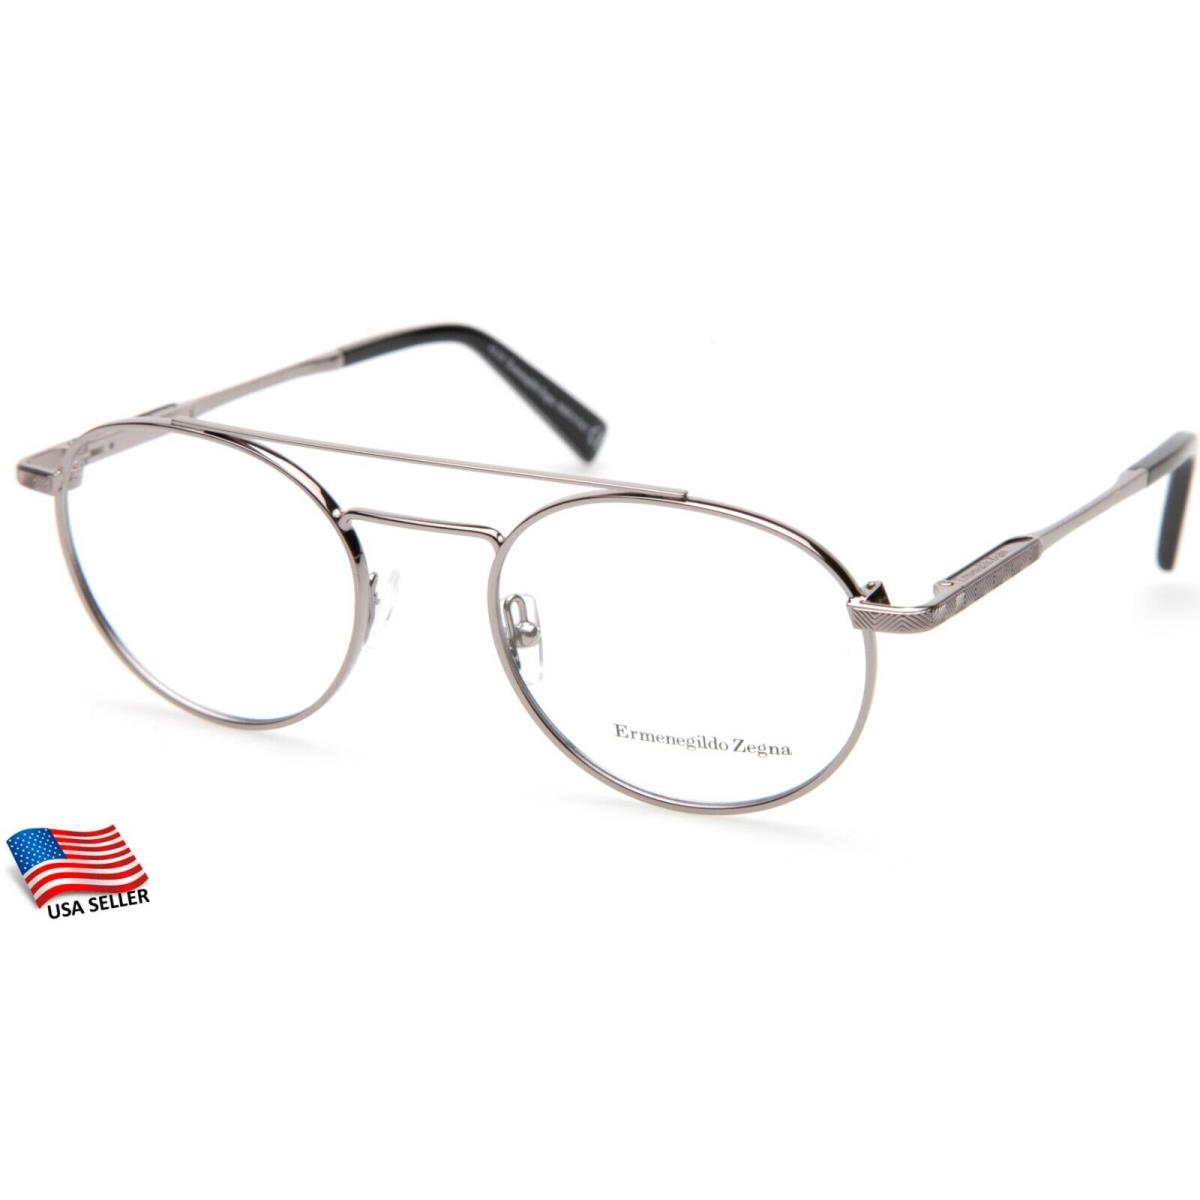 Ermenegildo Zegna EZ 5118 014 Silver Eyeglasses Frame 50-20-145 B43mm Italy